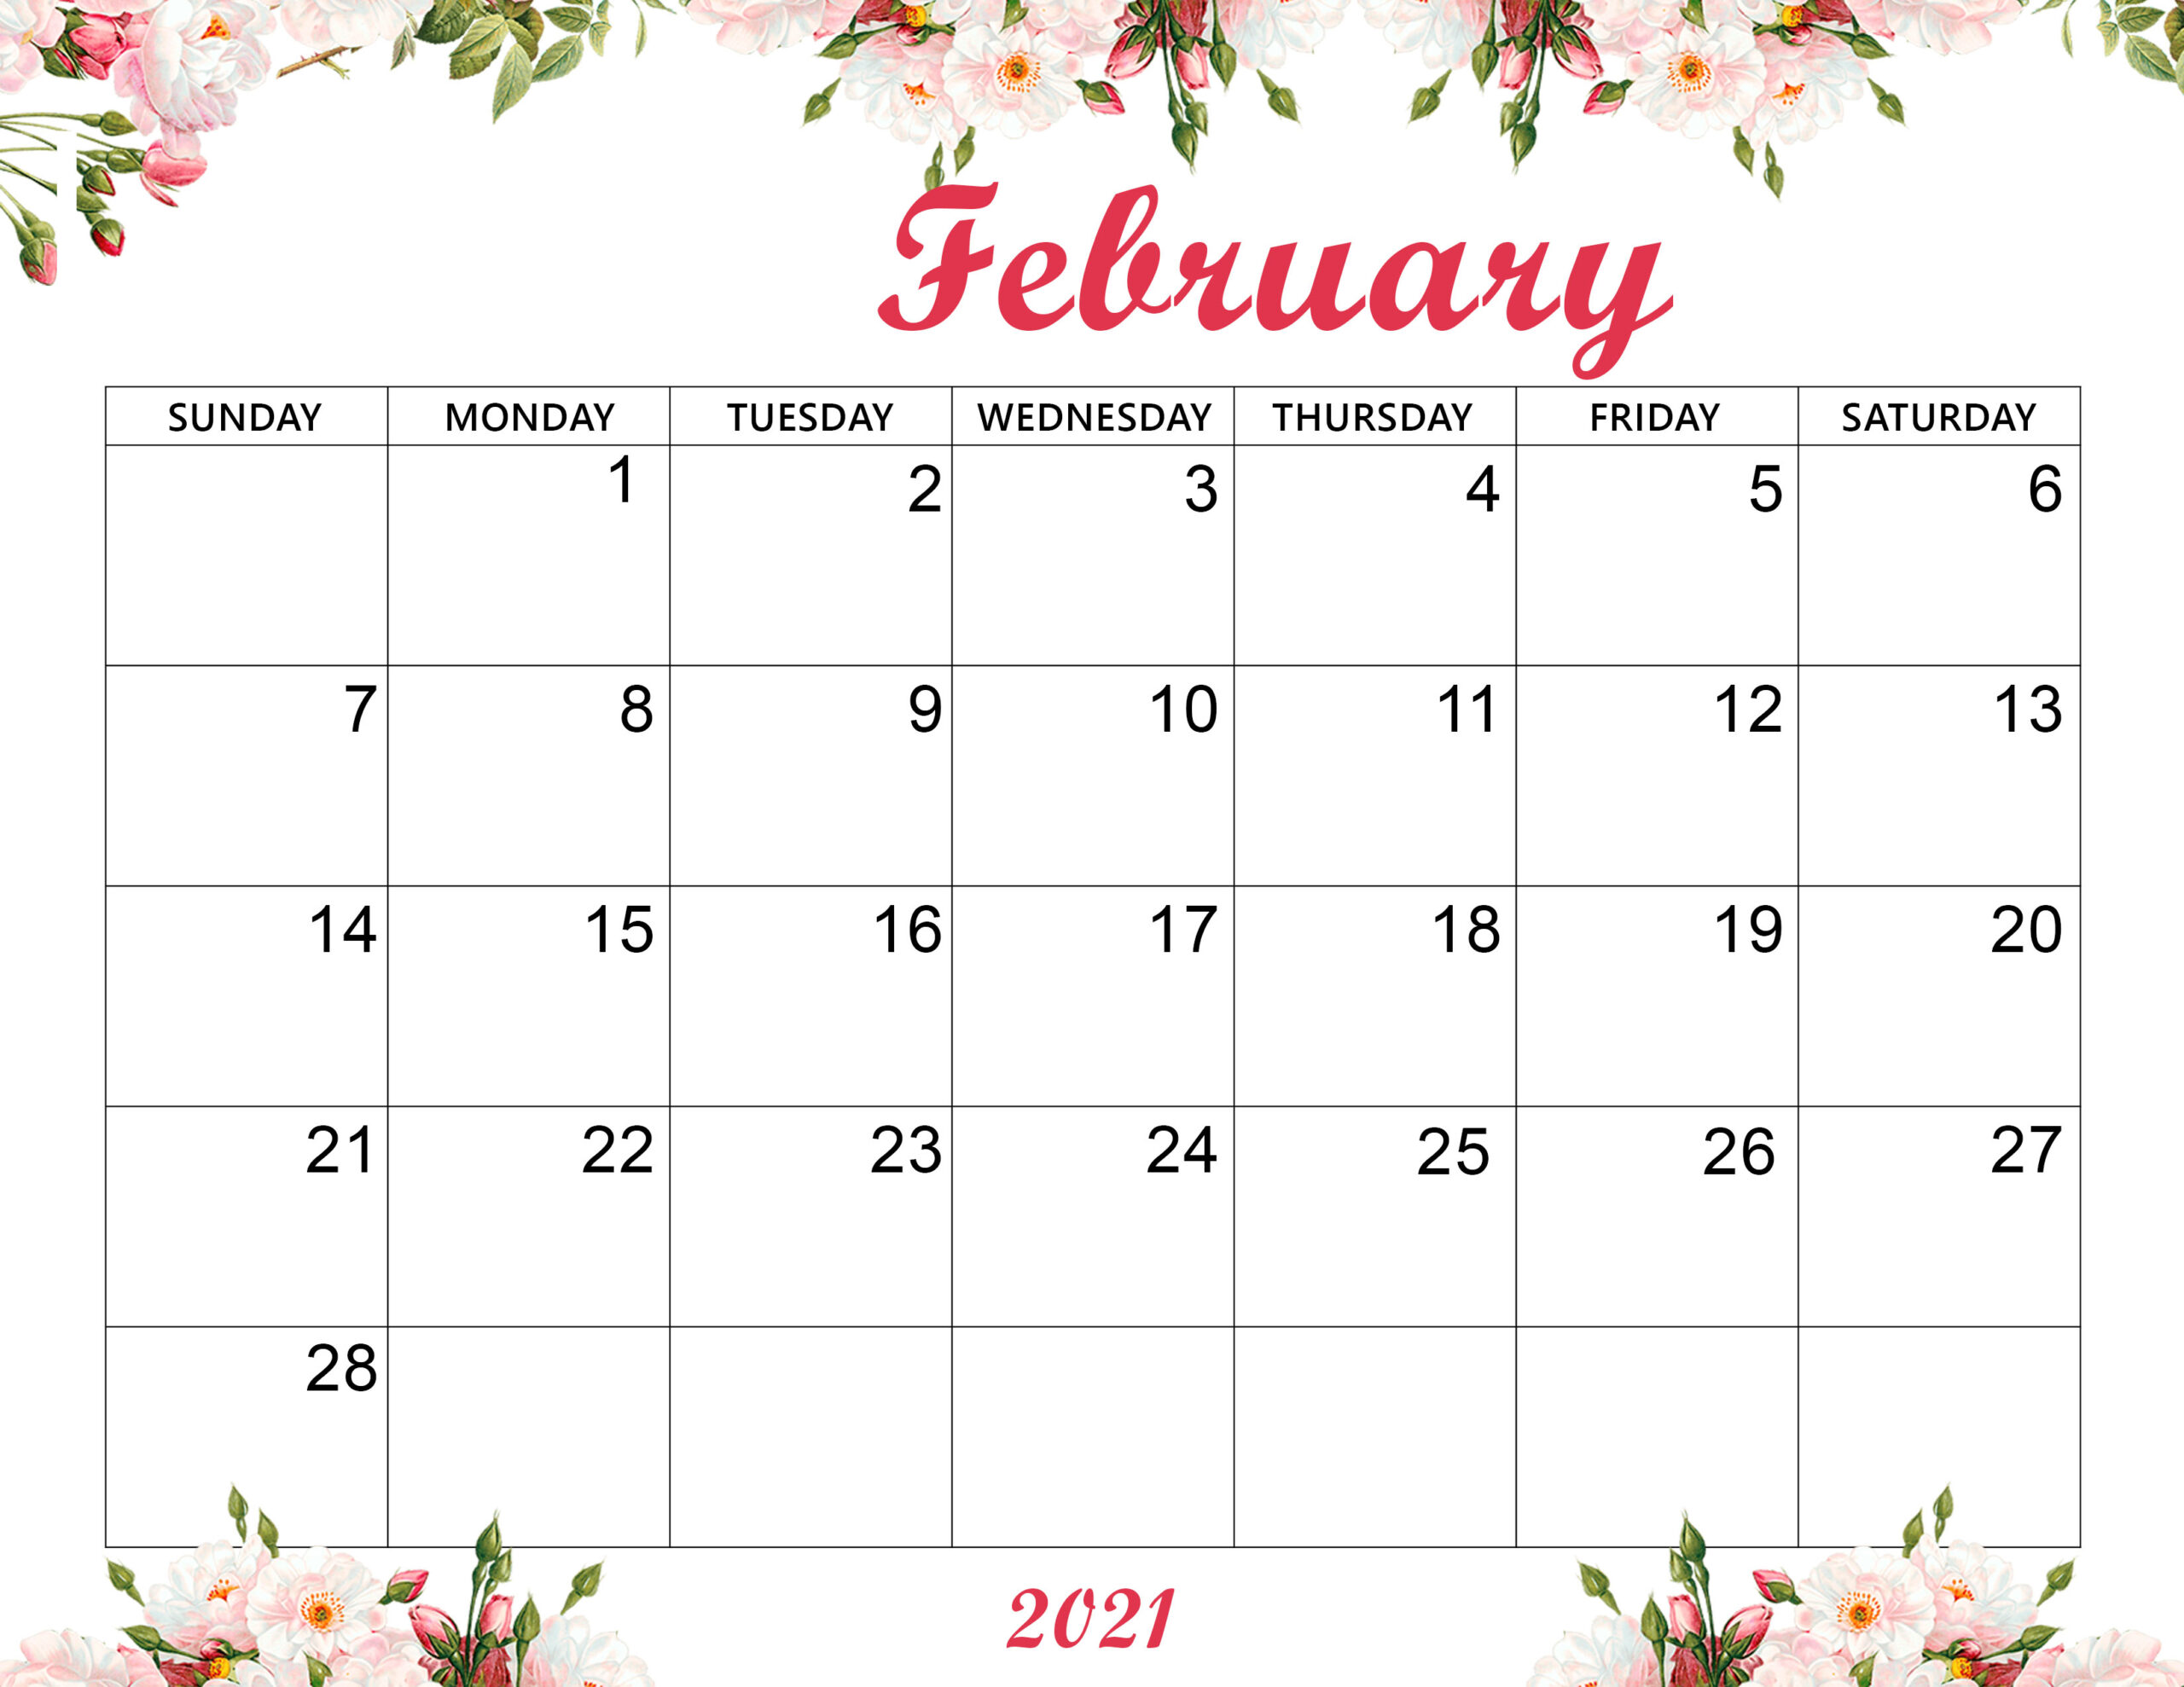 February 2021 Calendar Wallpapers Wallpaper Cave Tuhansia uusia ja laadukkaita kuvia joka paeivae. february 2021 calendar wallpapers